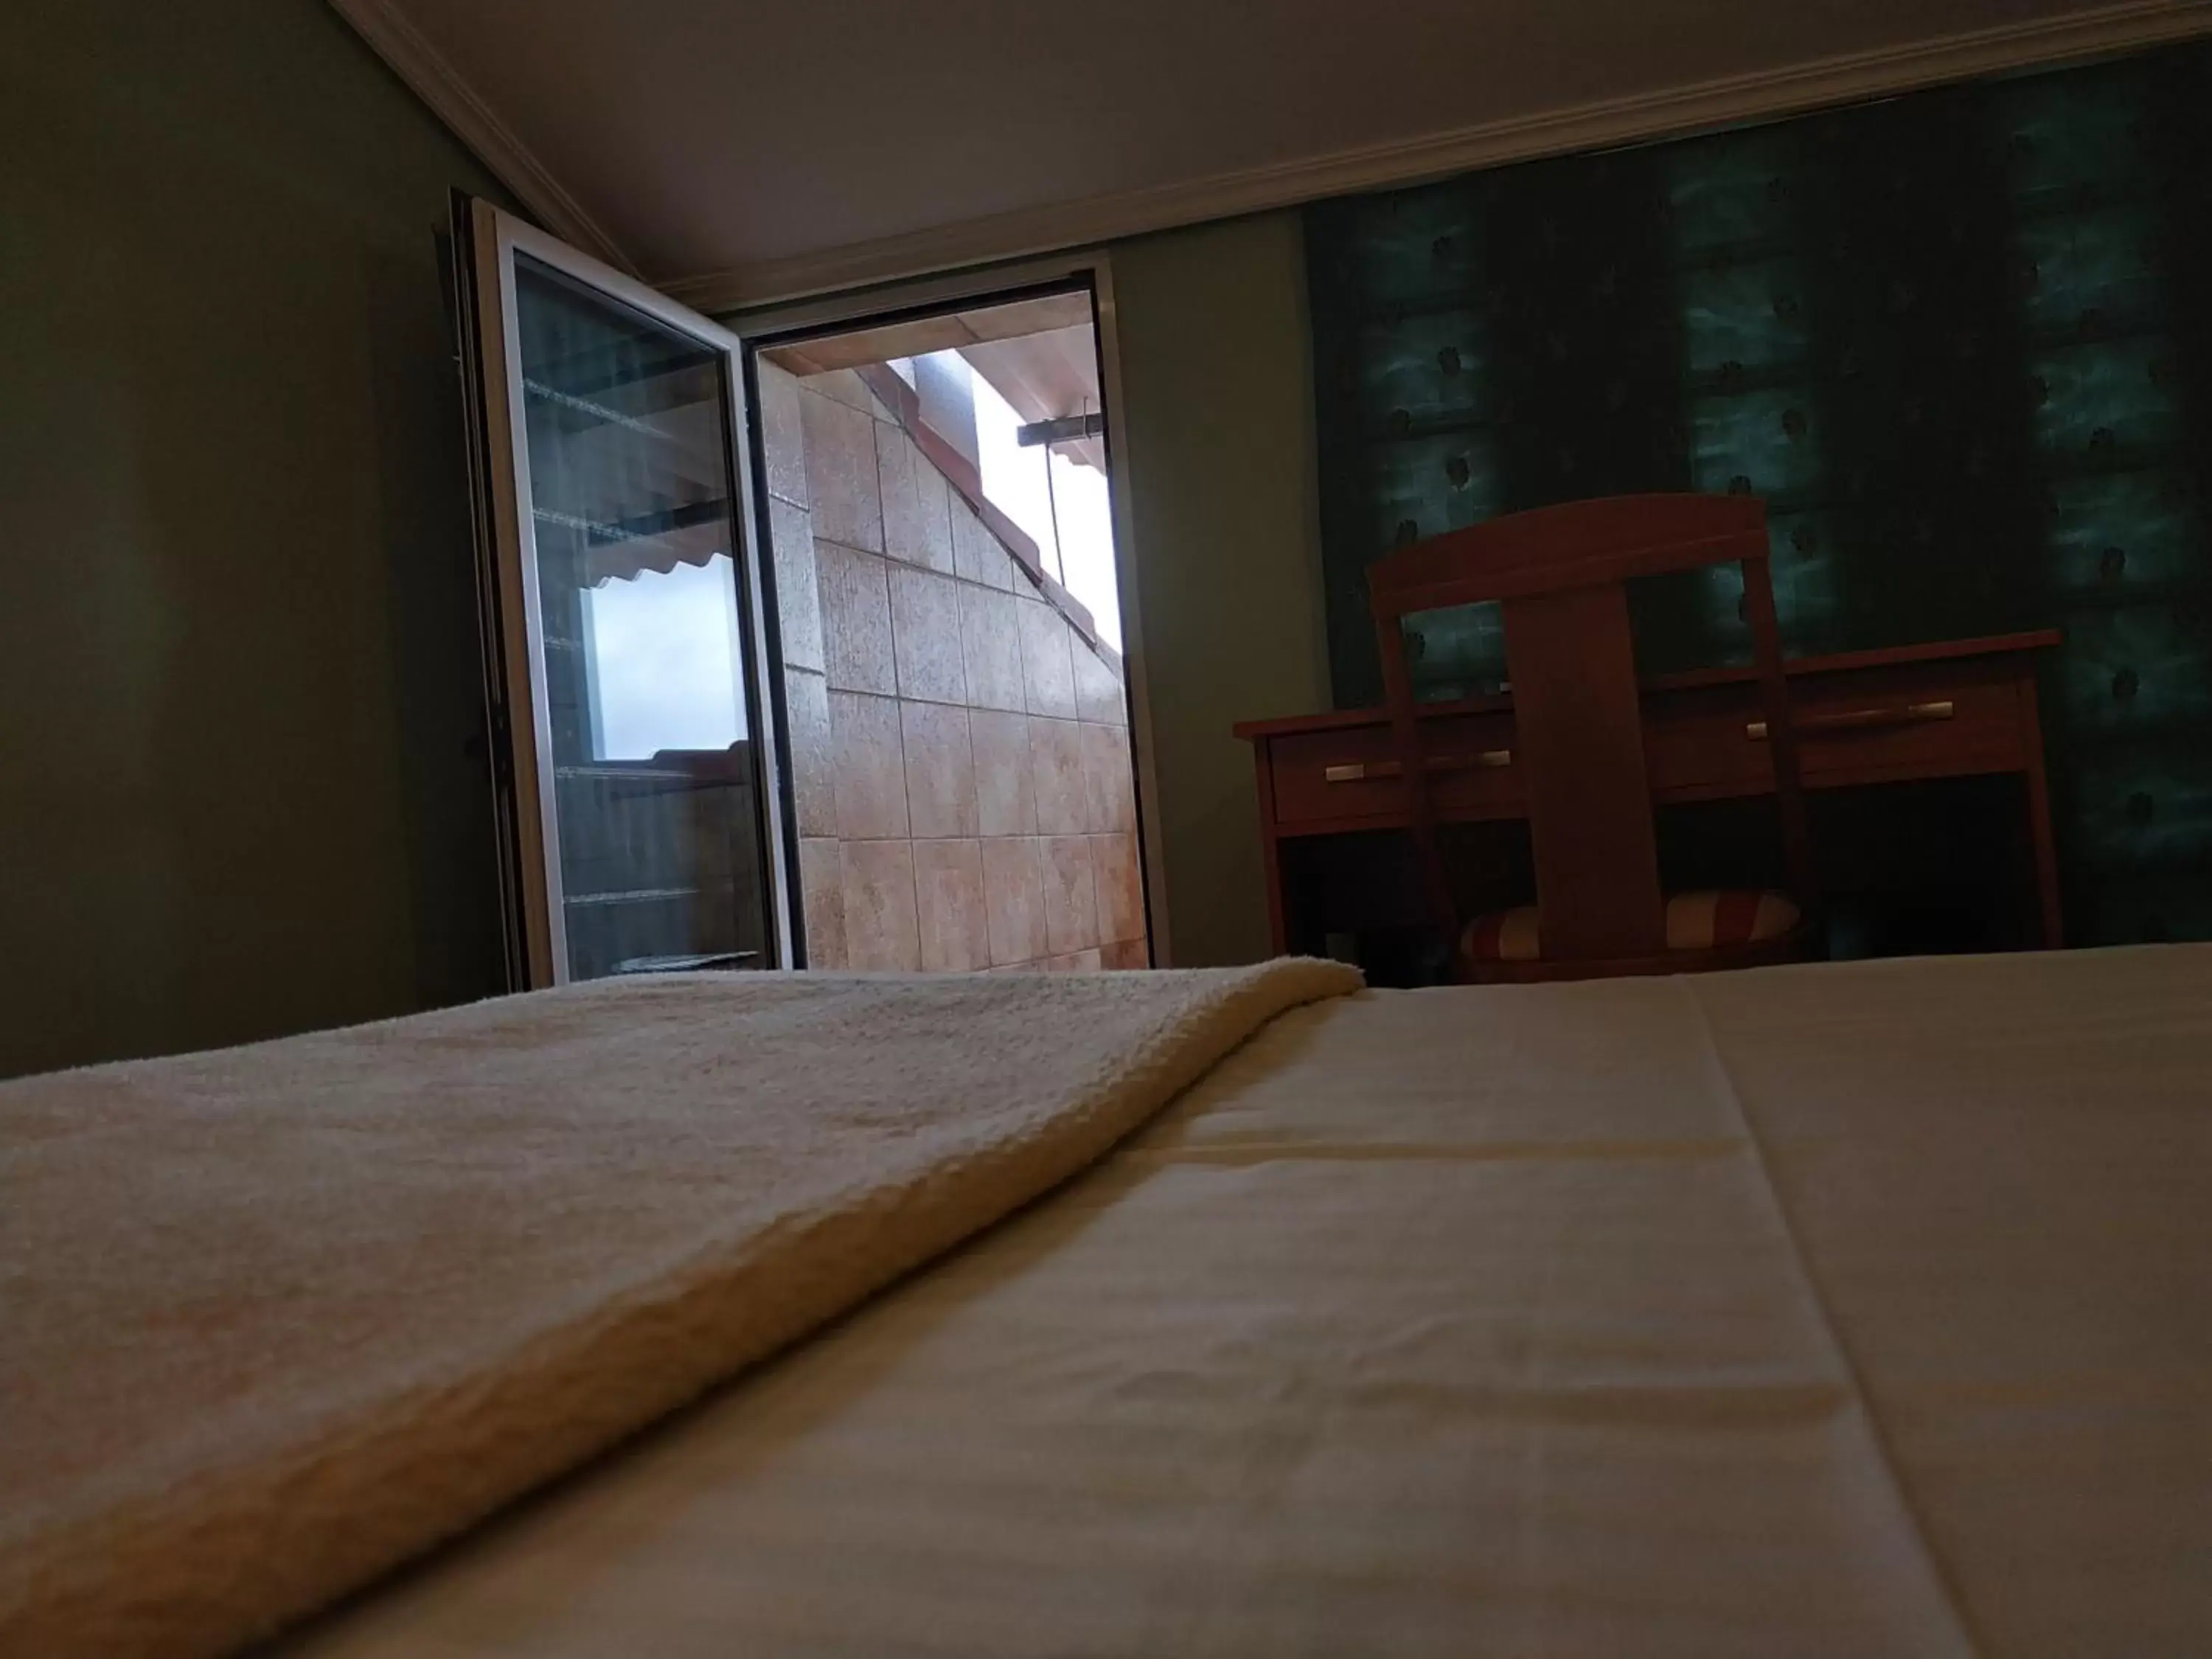 Bed in Hotel Real de Castilla